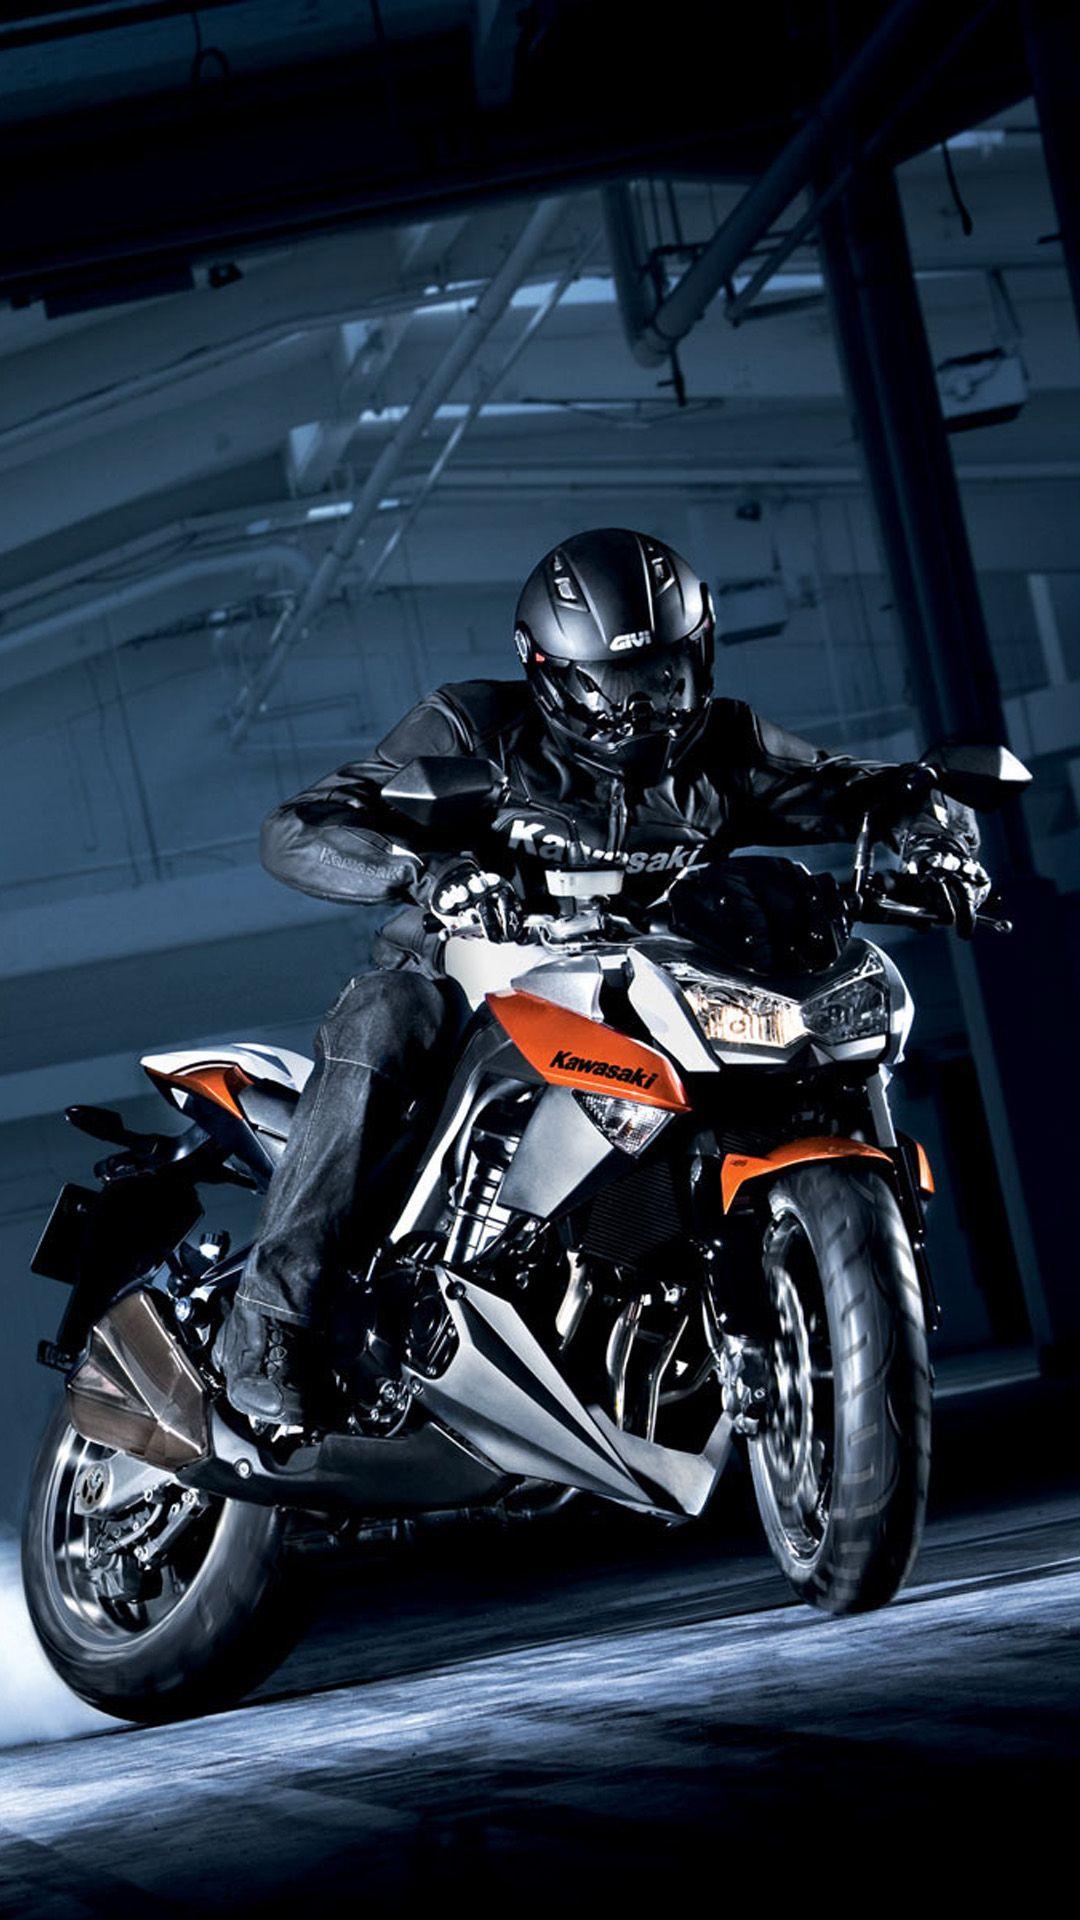 Hình nền Android 1080x1920 Cool Kawasaki Motorcycle - Hình nền Android HD